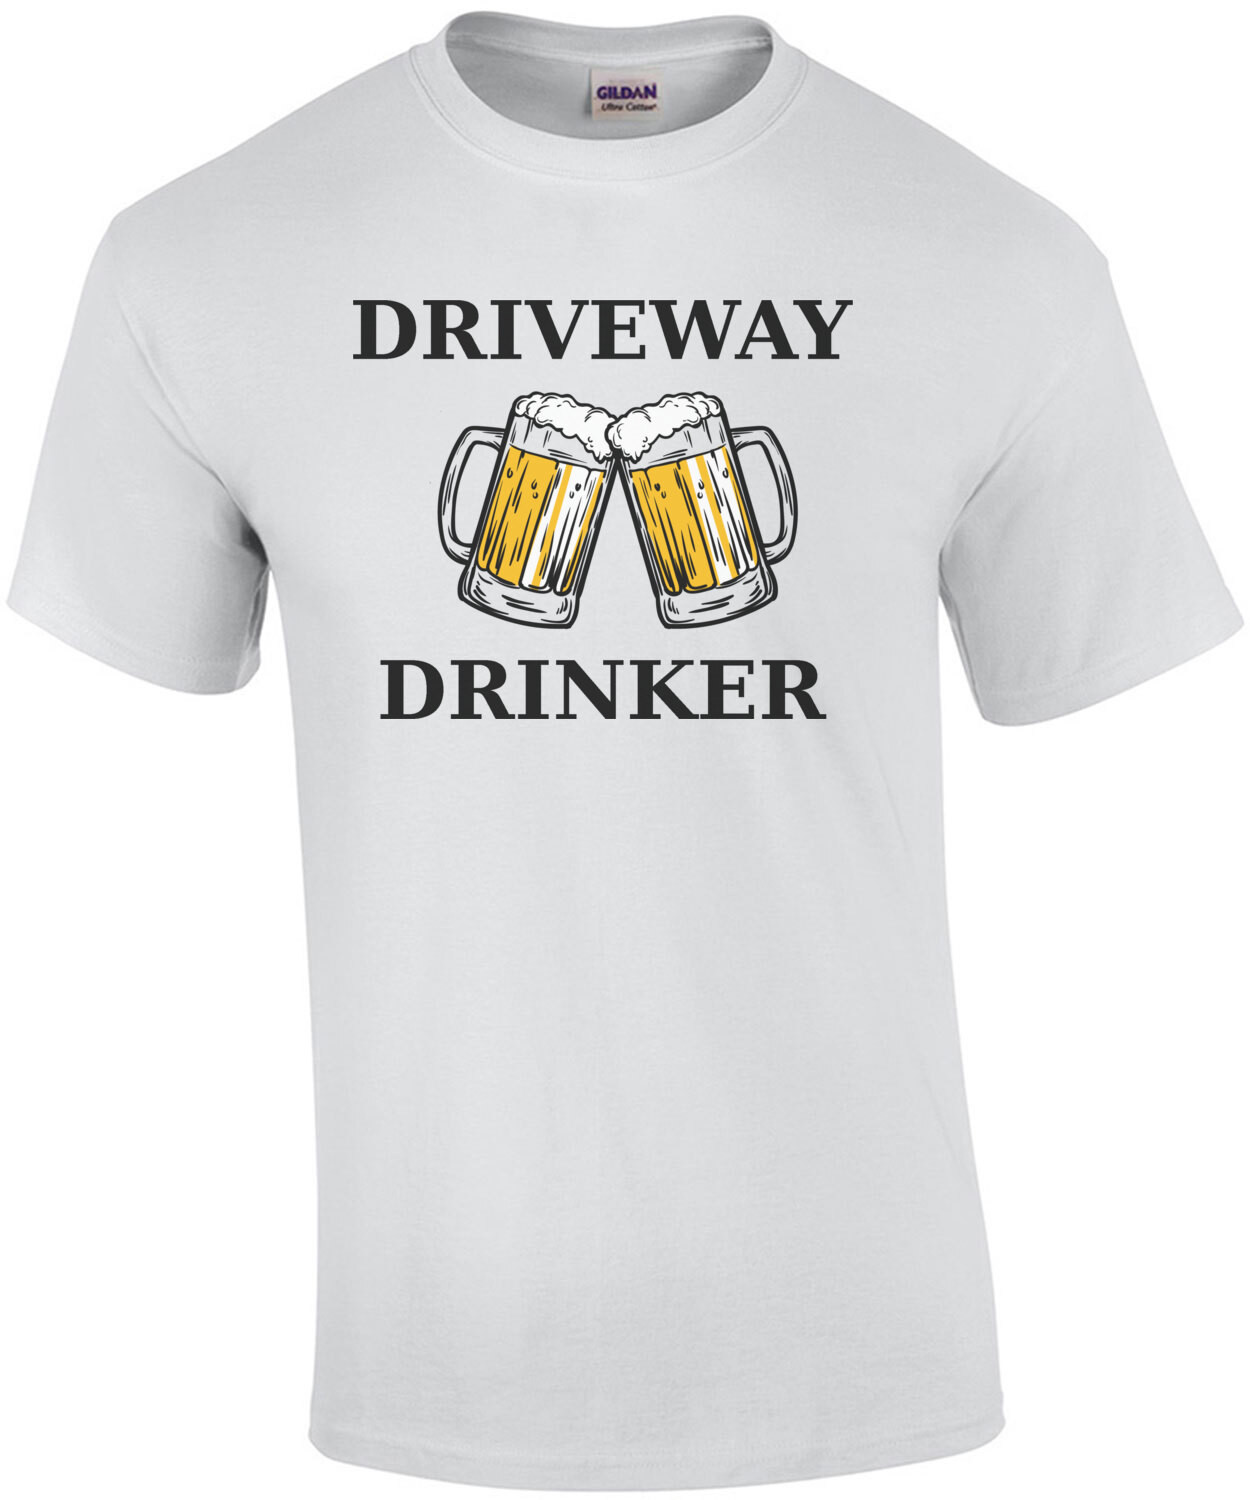 Driveway Drinker - funny drinking t-shirt